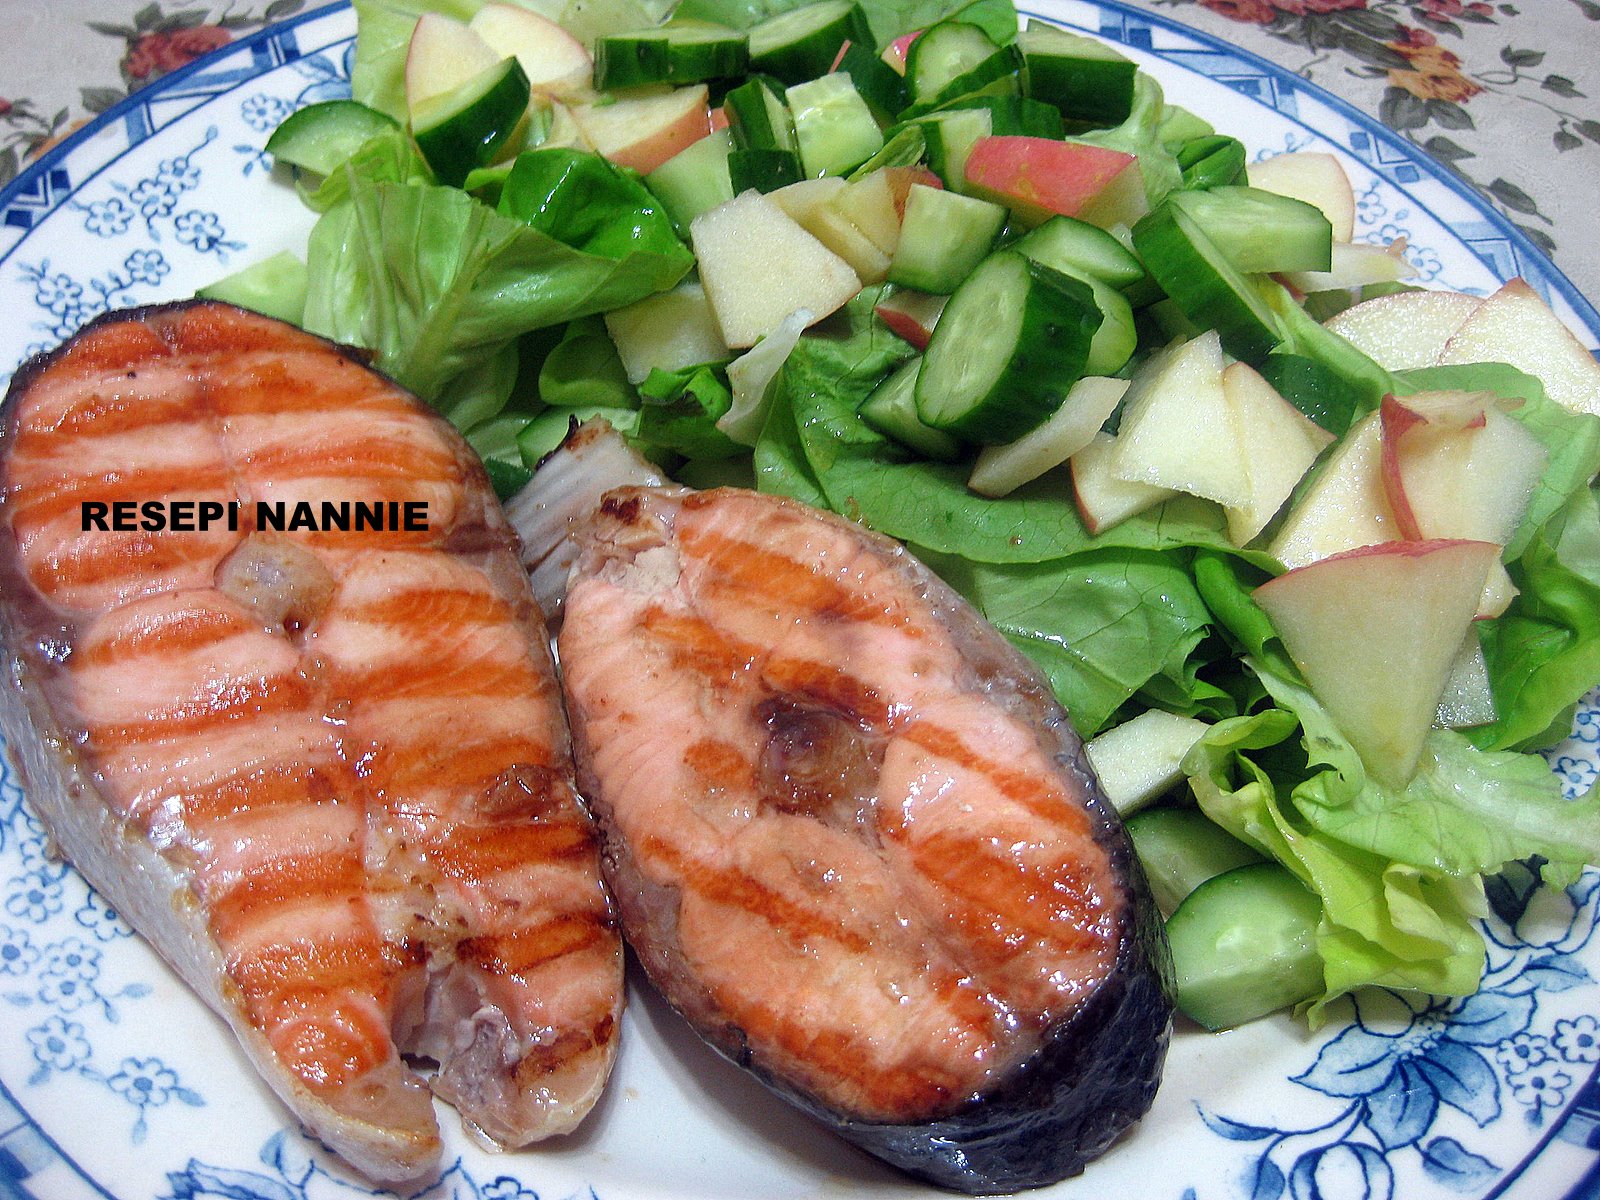 RESEPI NANNIE: Salmon grill dengan salad